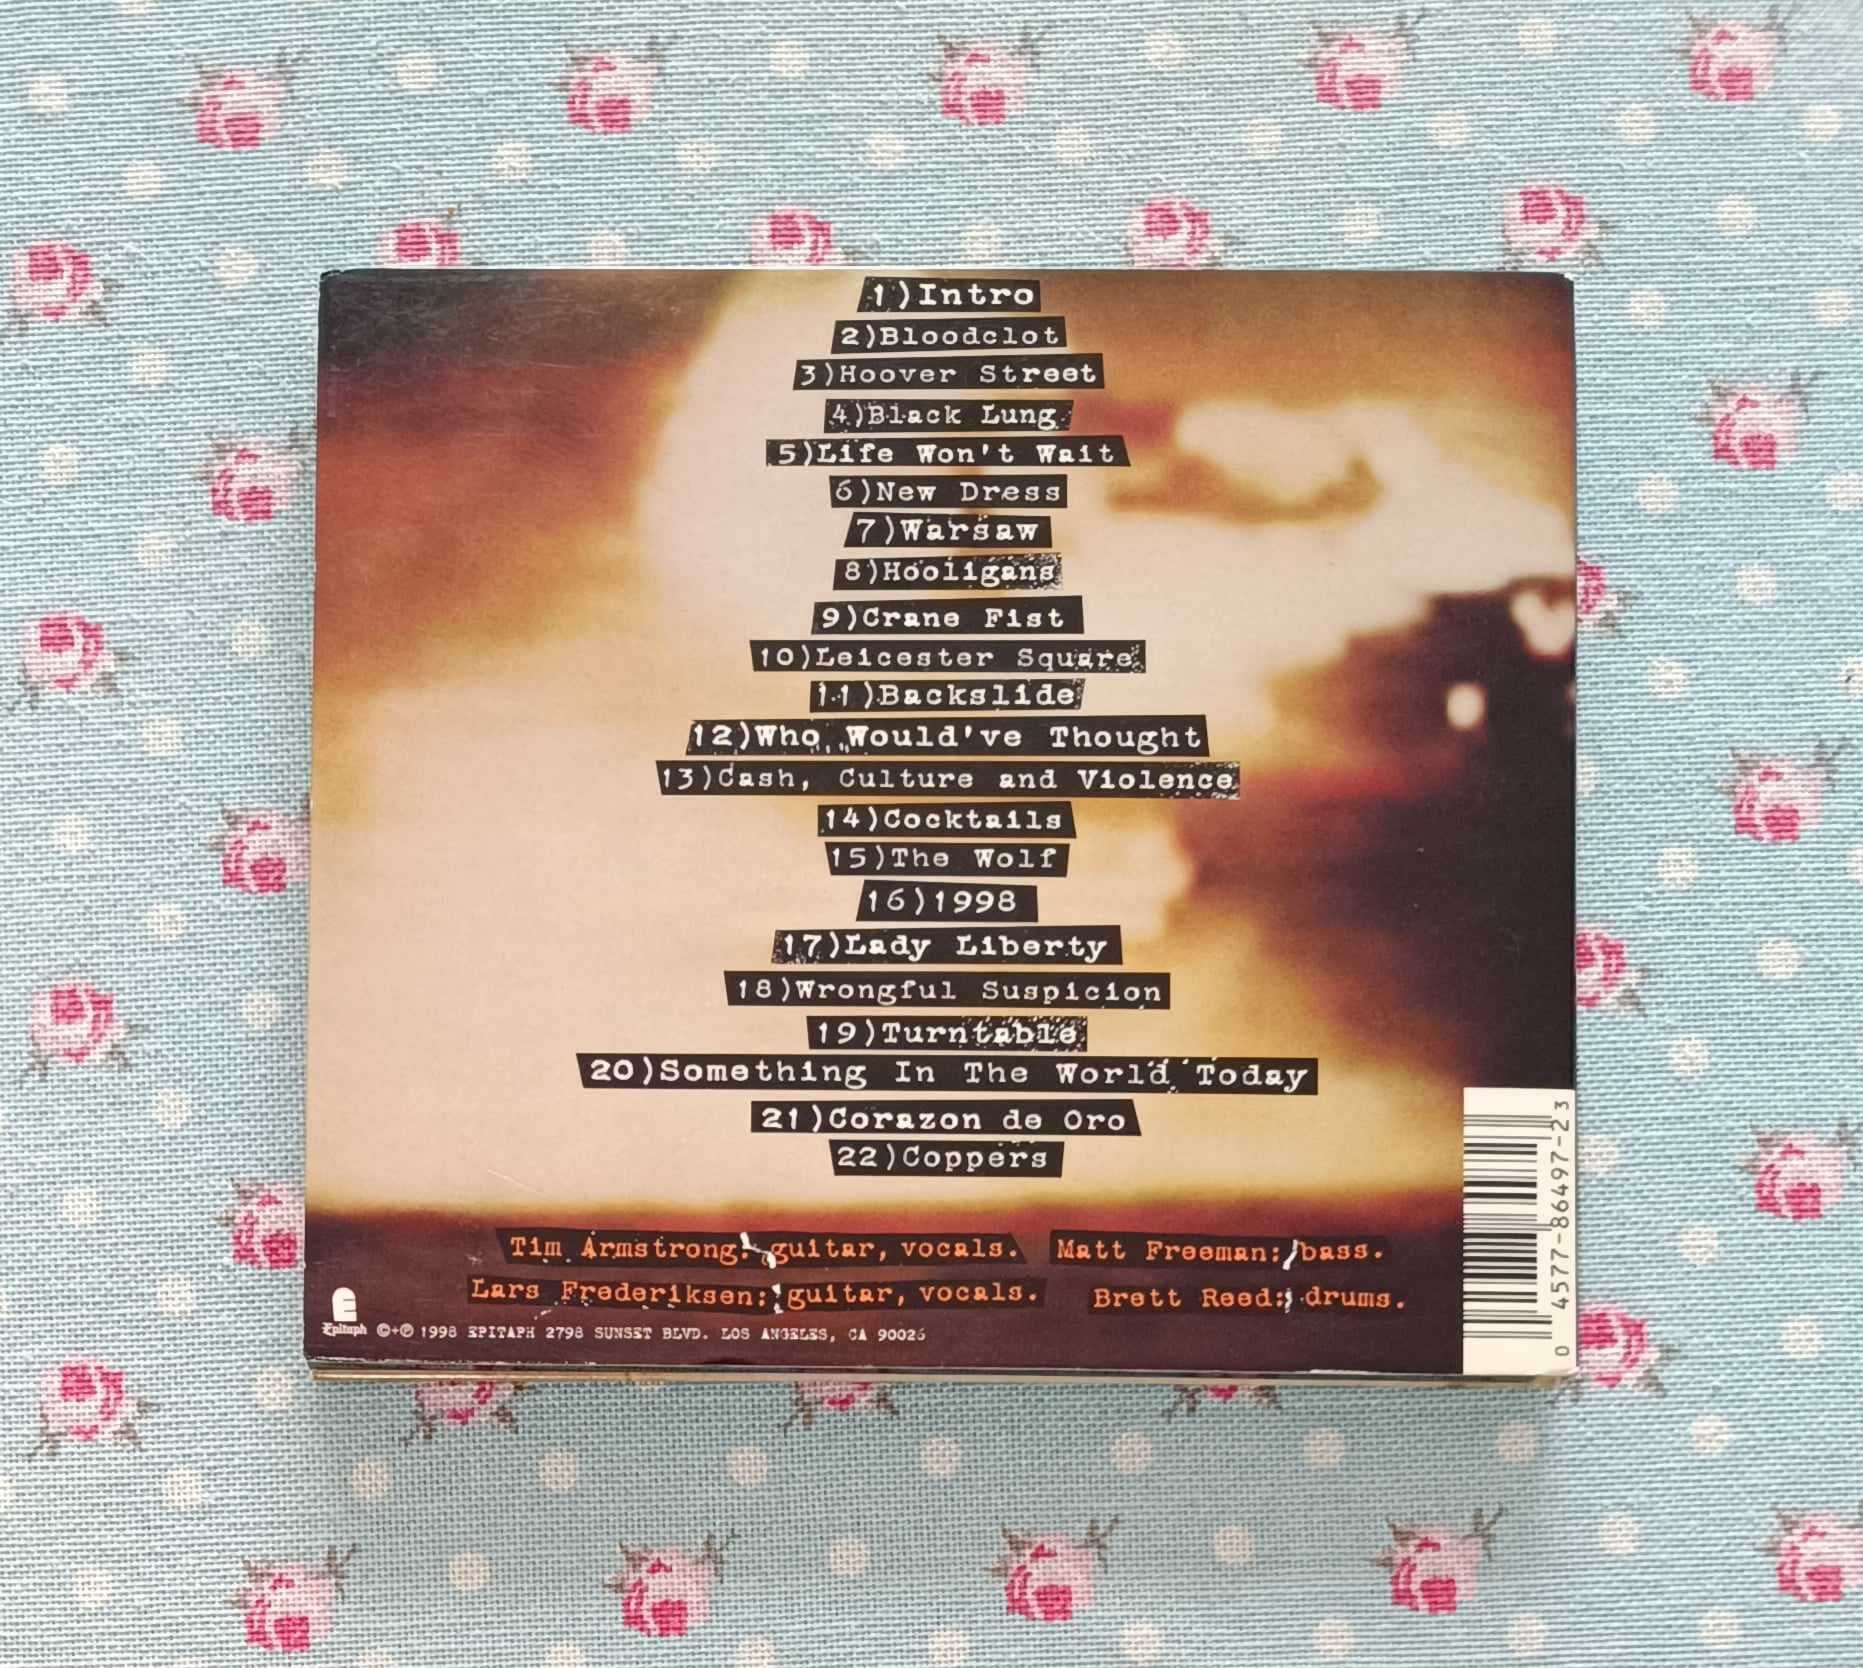 CD Rancid – Life Won't Wait (1998)